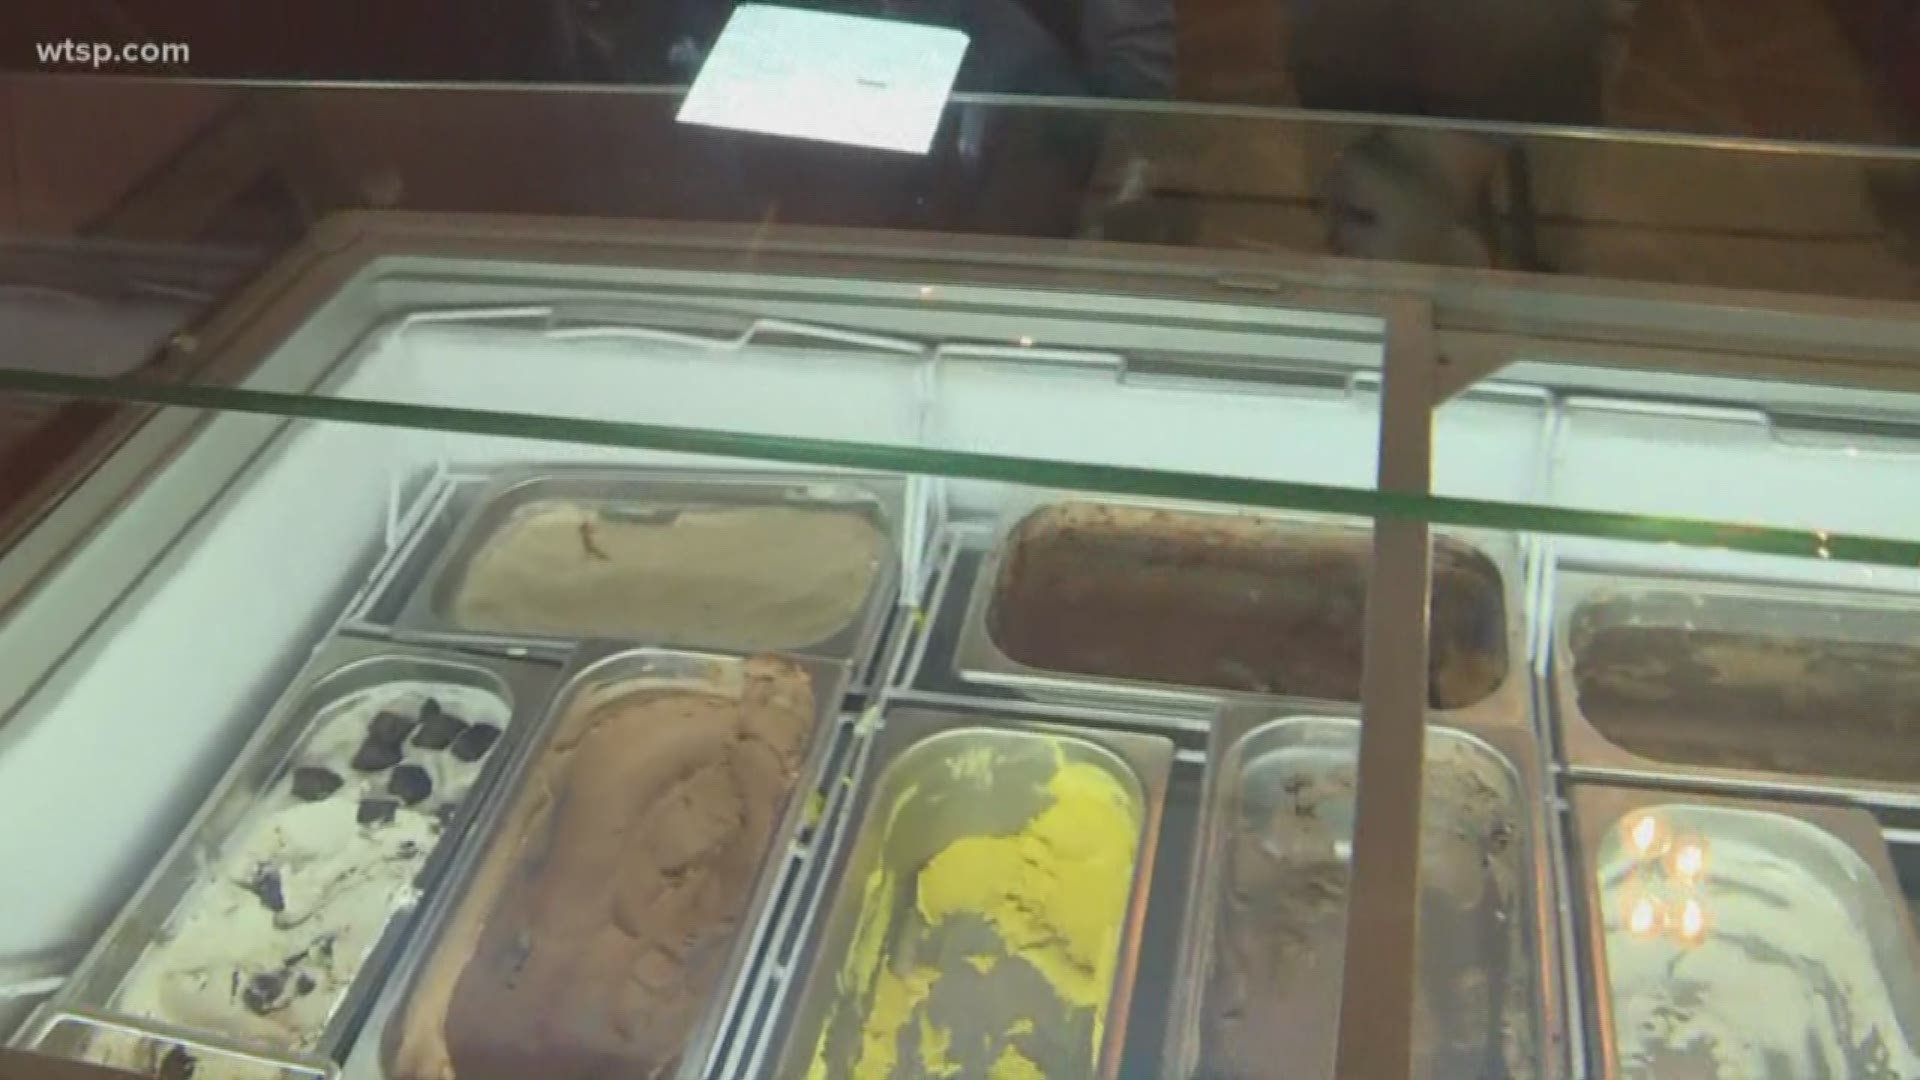 Plant+Love Ice Cream in St. Petersburg uses coconut millk in its ice cream.